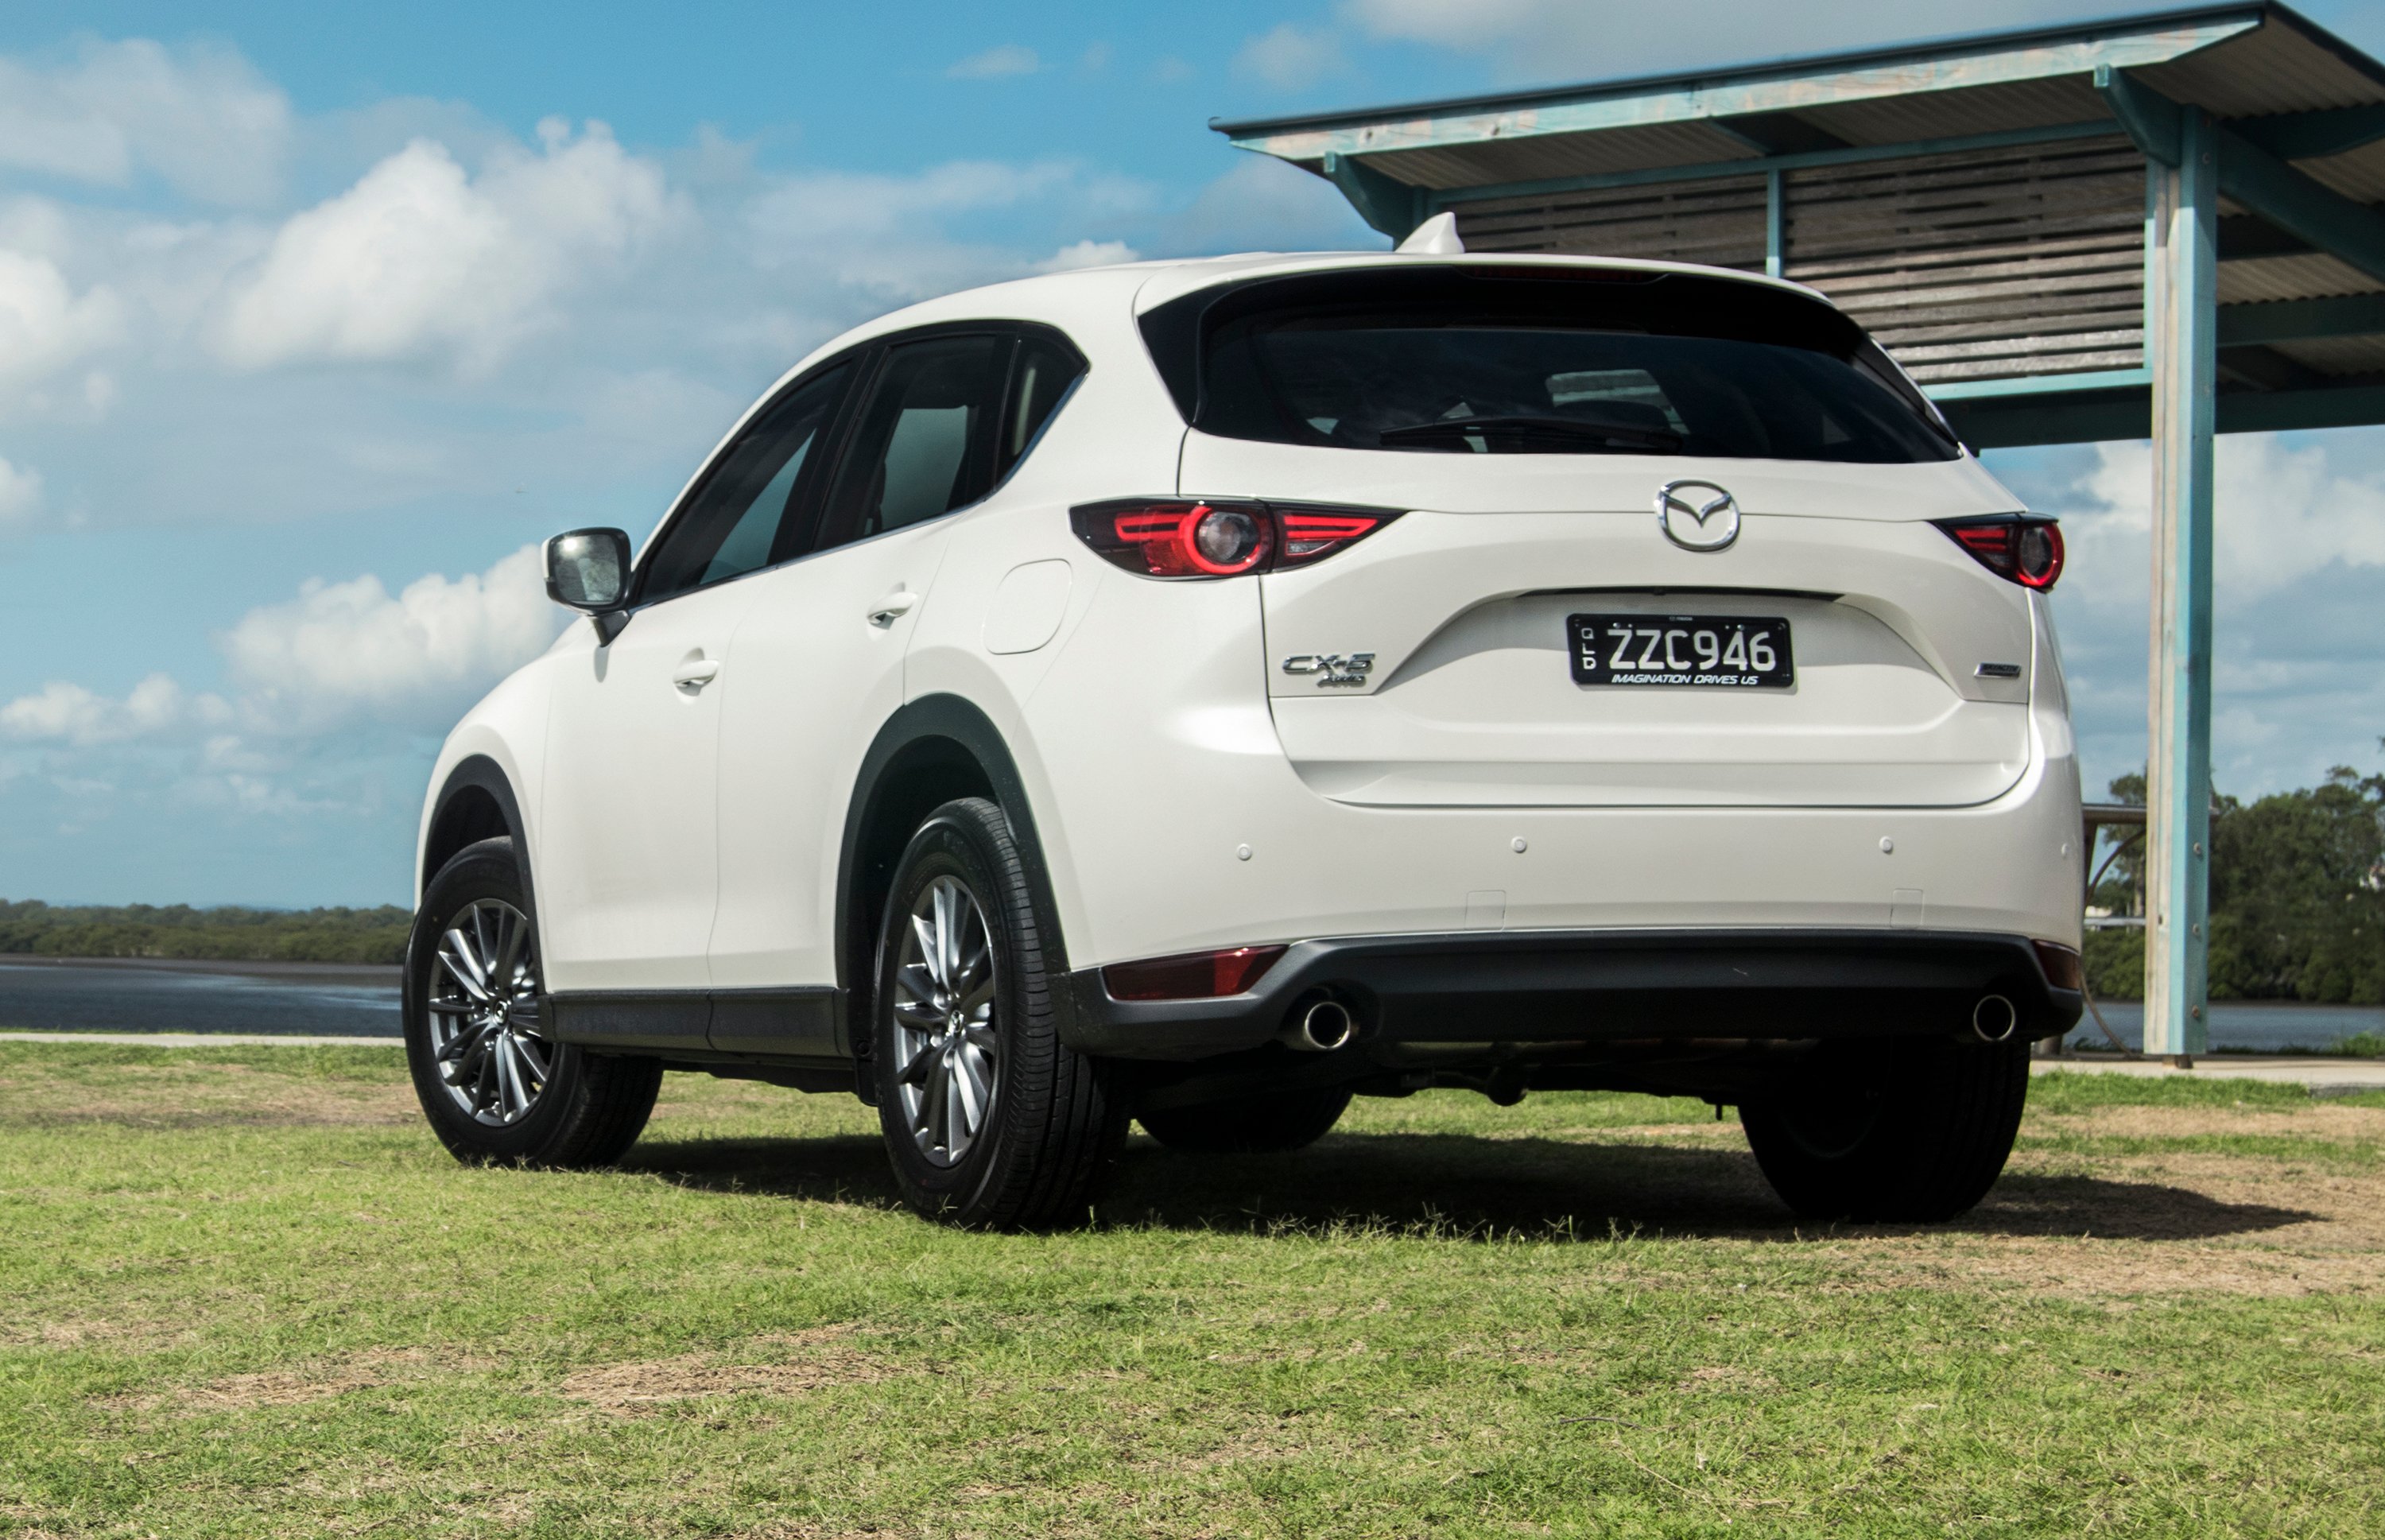 2017 Mazda CX5 range review Photos (1 of 116)